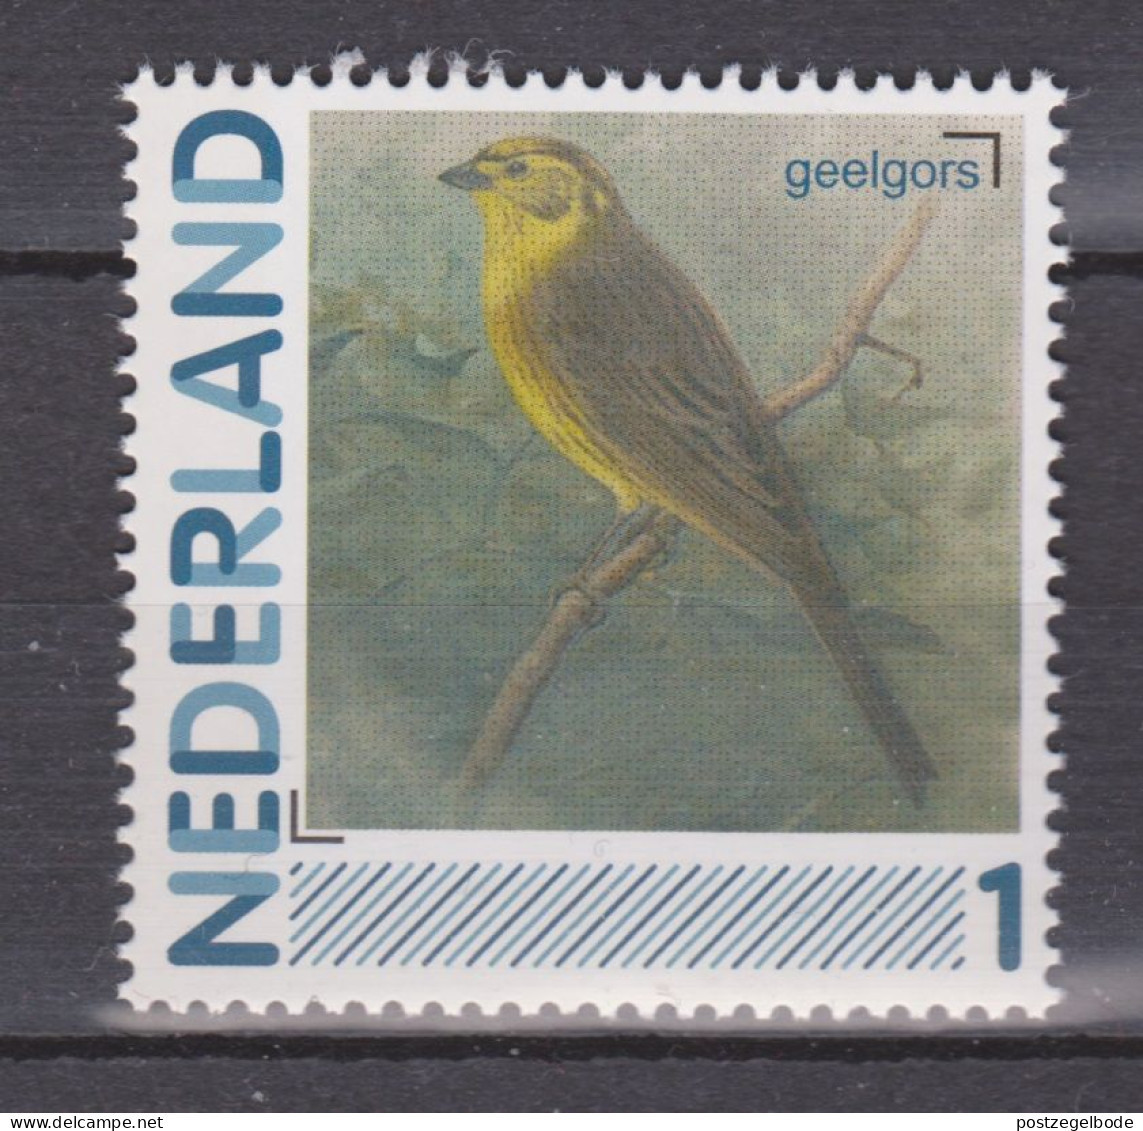 Nederland Netherlands Pays Bas Holanda MNH Geelgors Yellowhammer Bruant Jaune Escribano Cerillo Vogel Bird Ave Oiseau - Spatzen